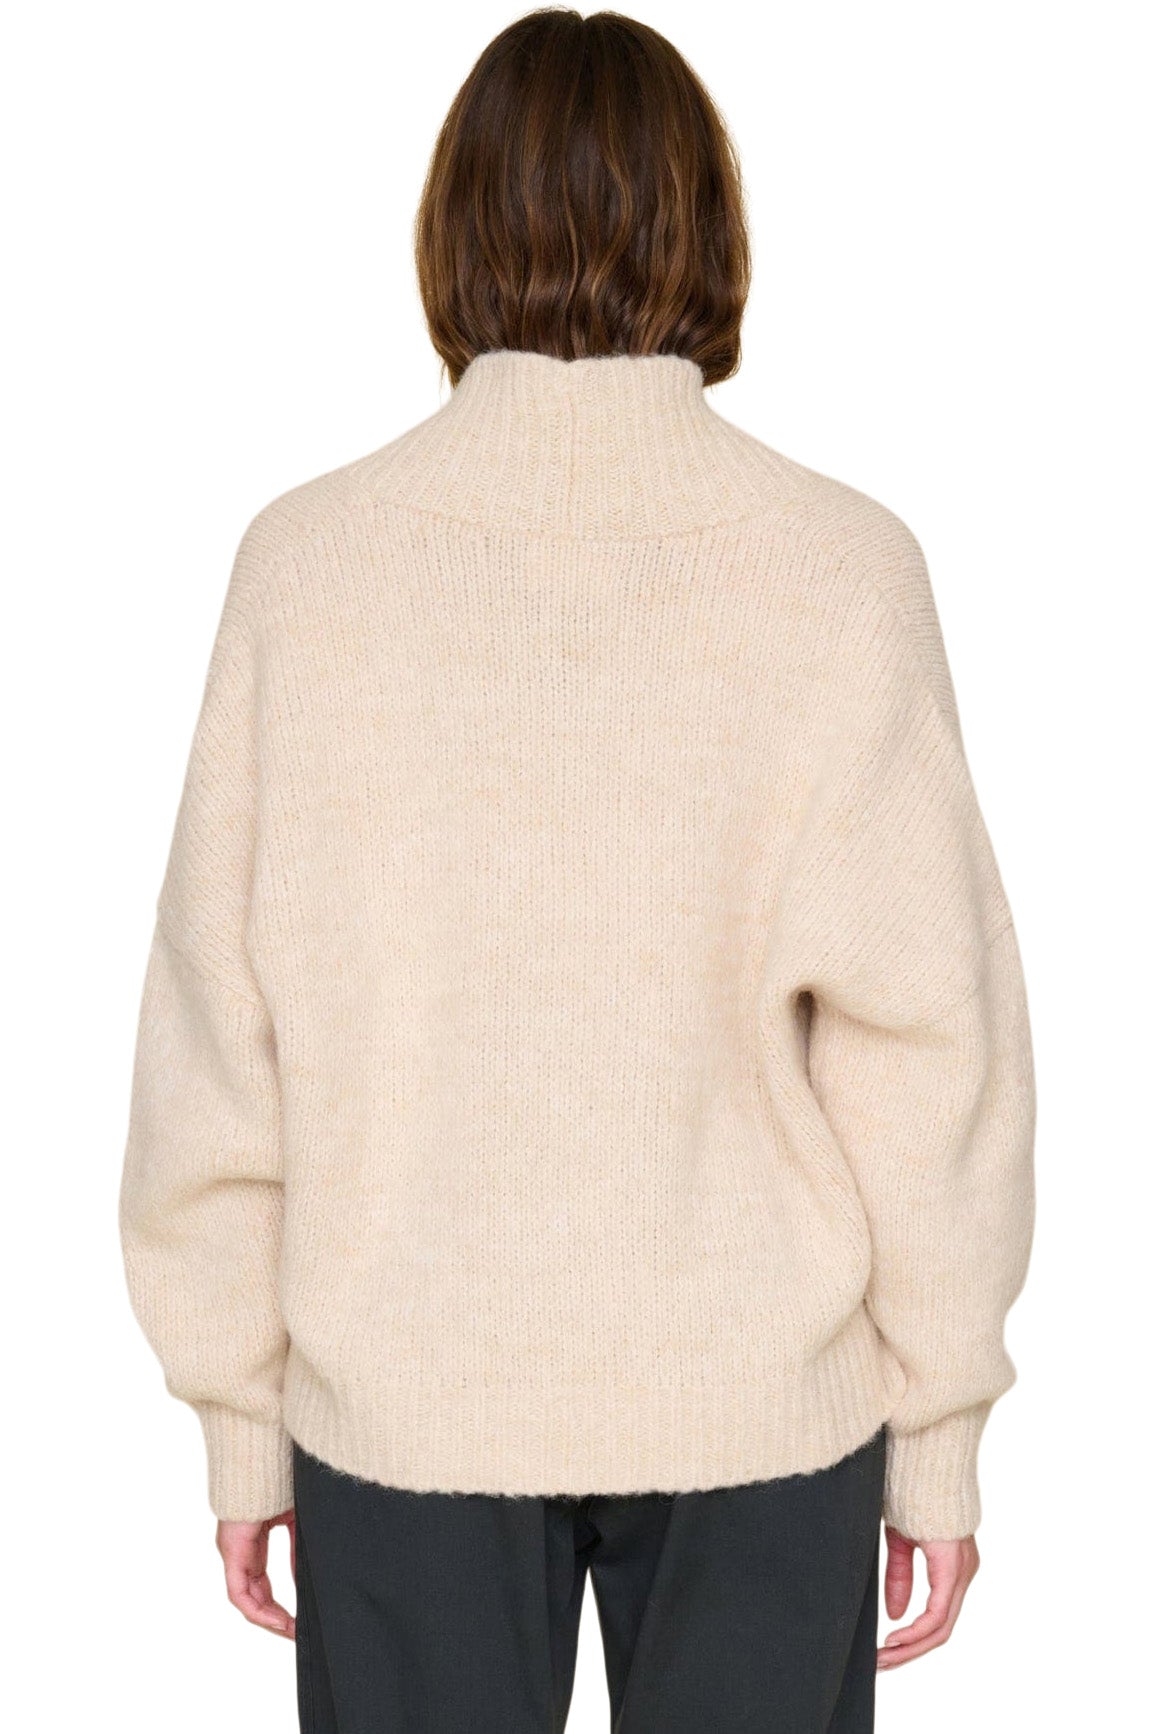 Xirena Keyes Sweater in Dune Marble